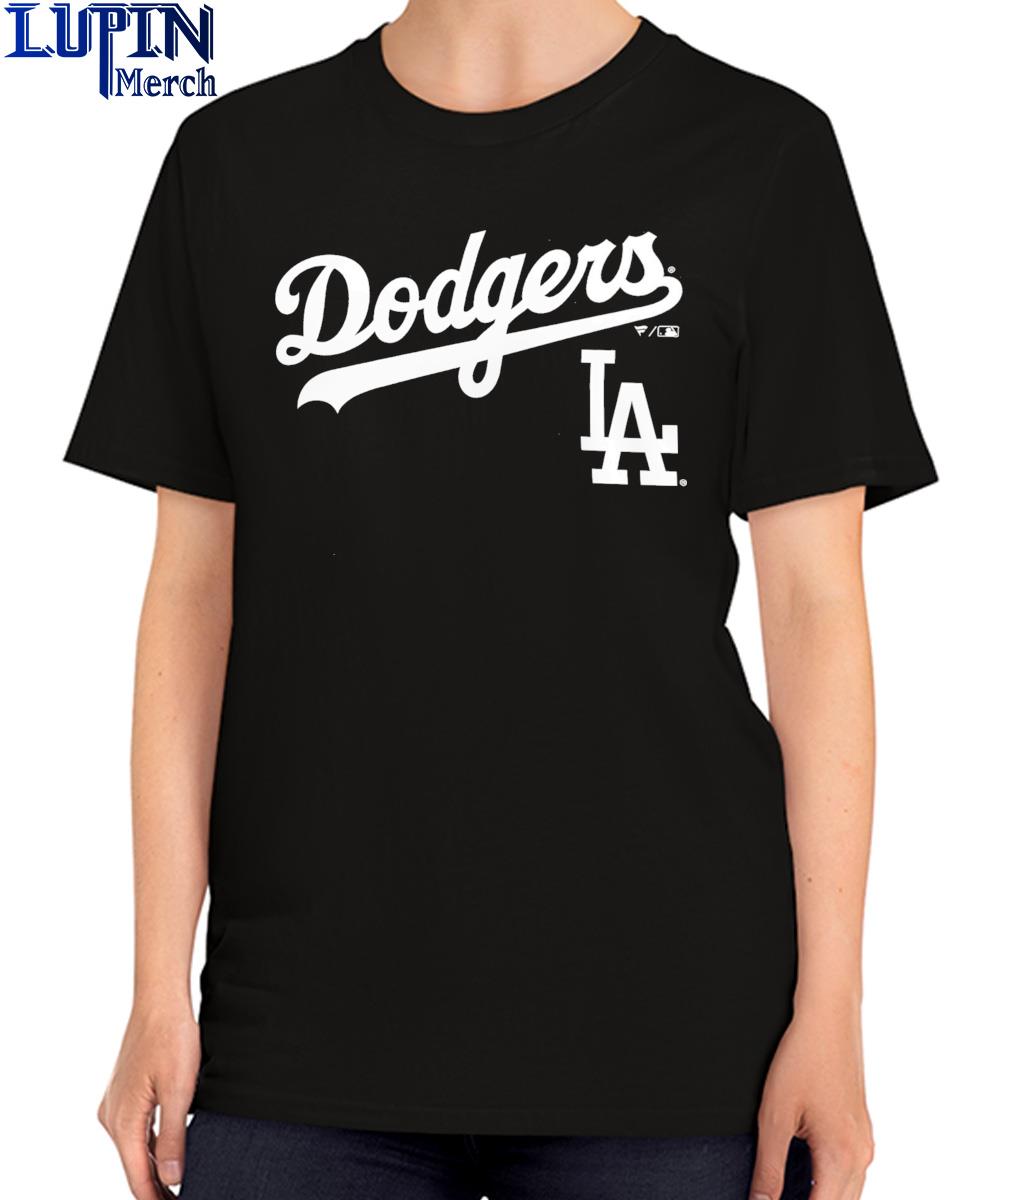 Los Angeles Dodgers Shirt, Majestic Dodgers T-Shirts, Tank Tops